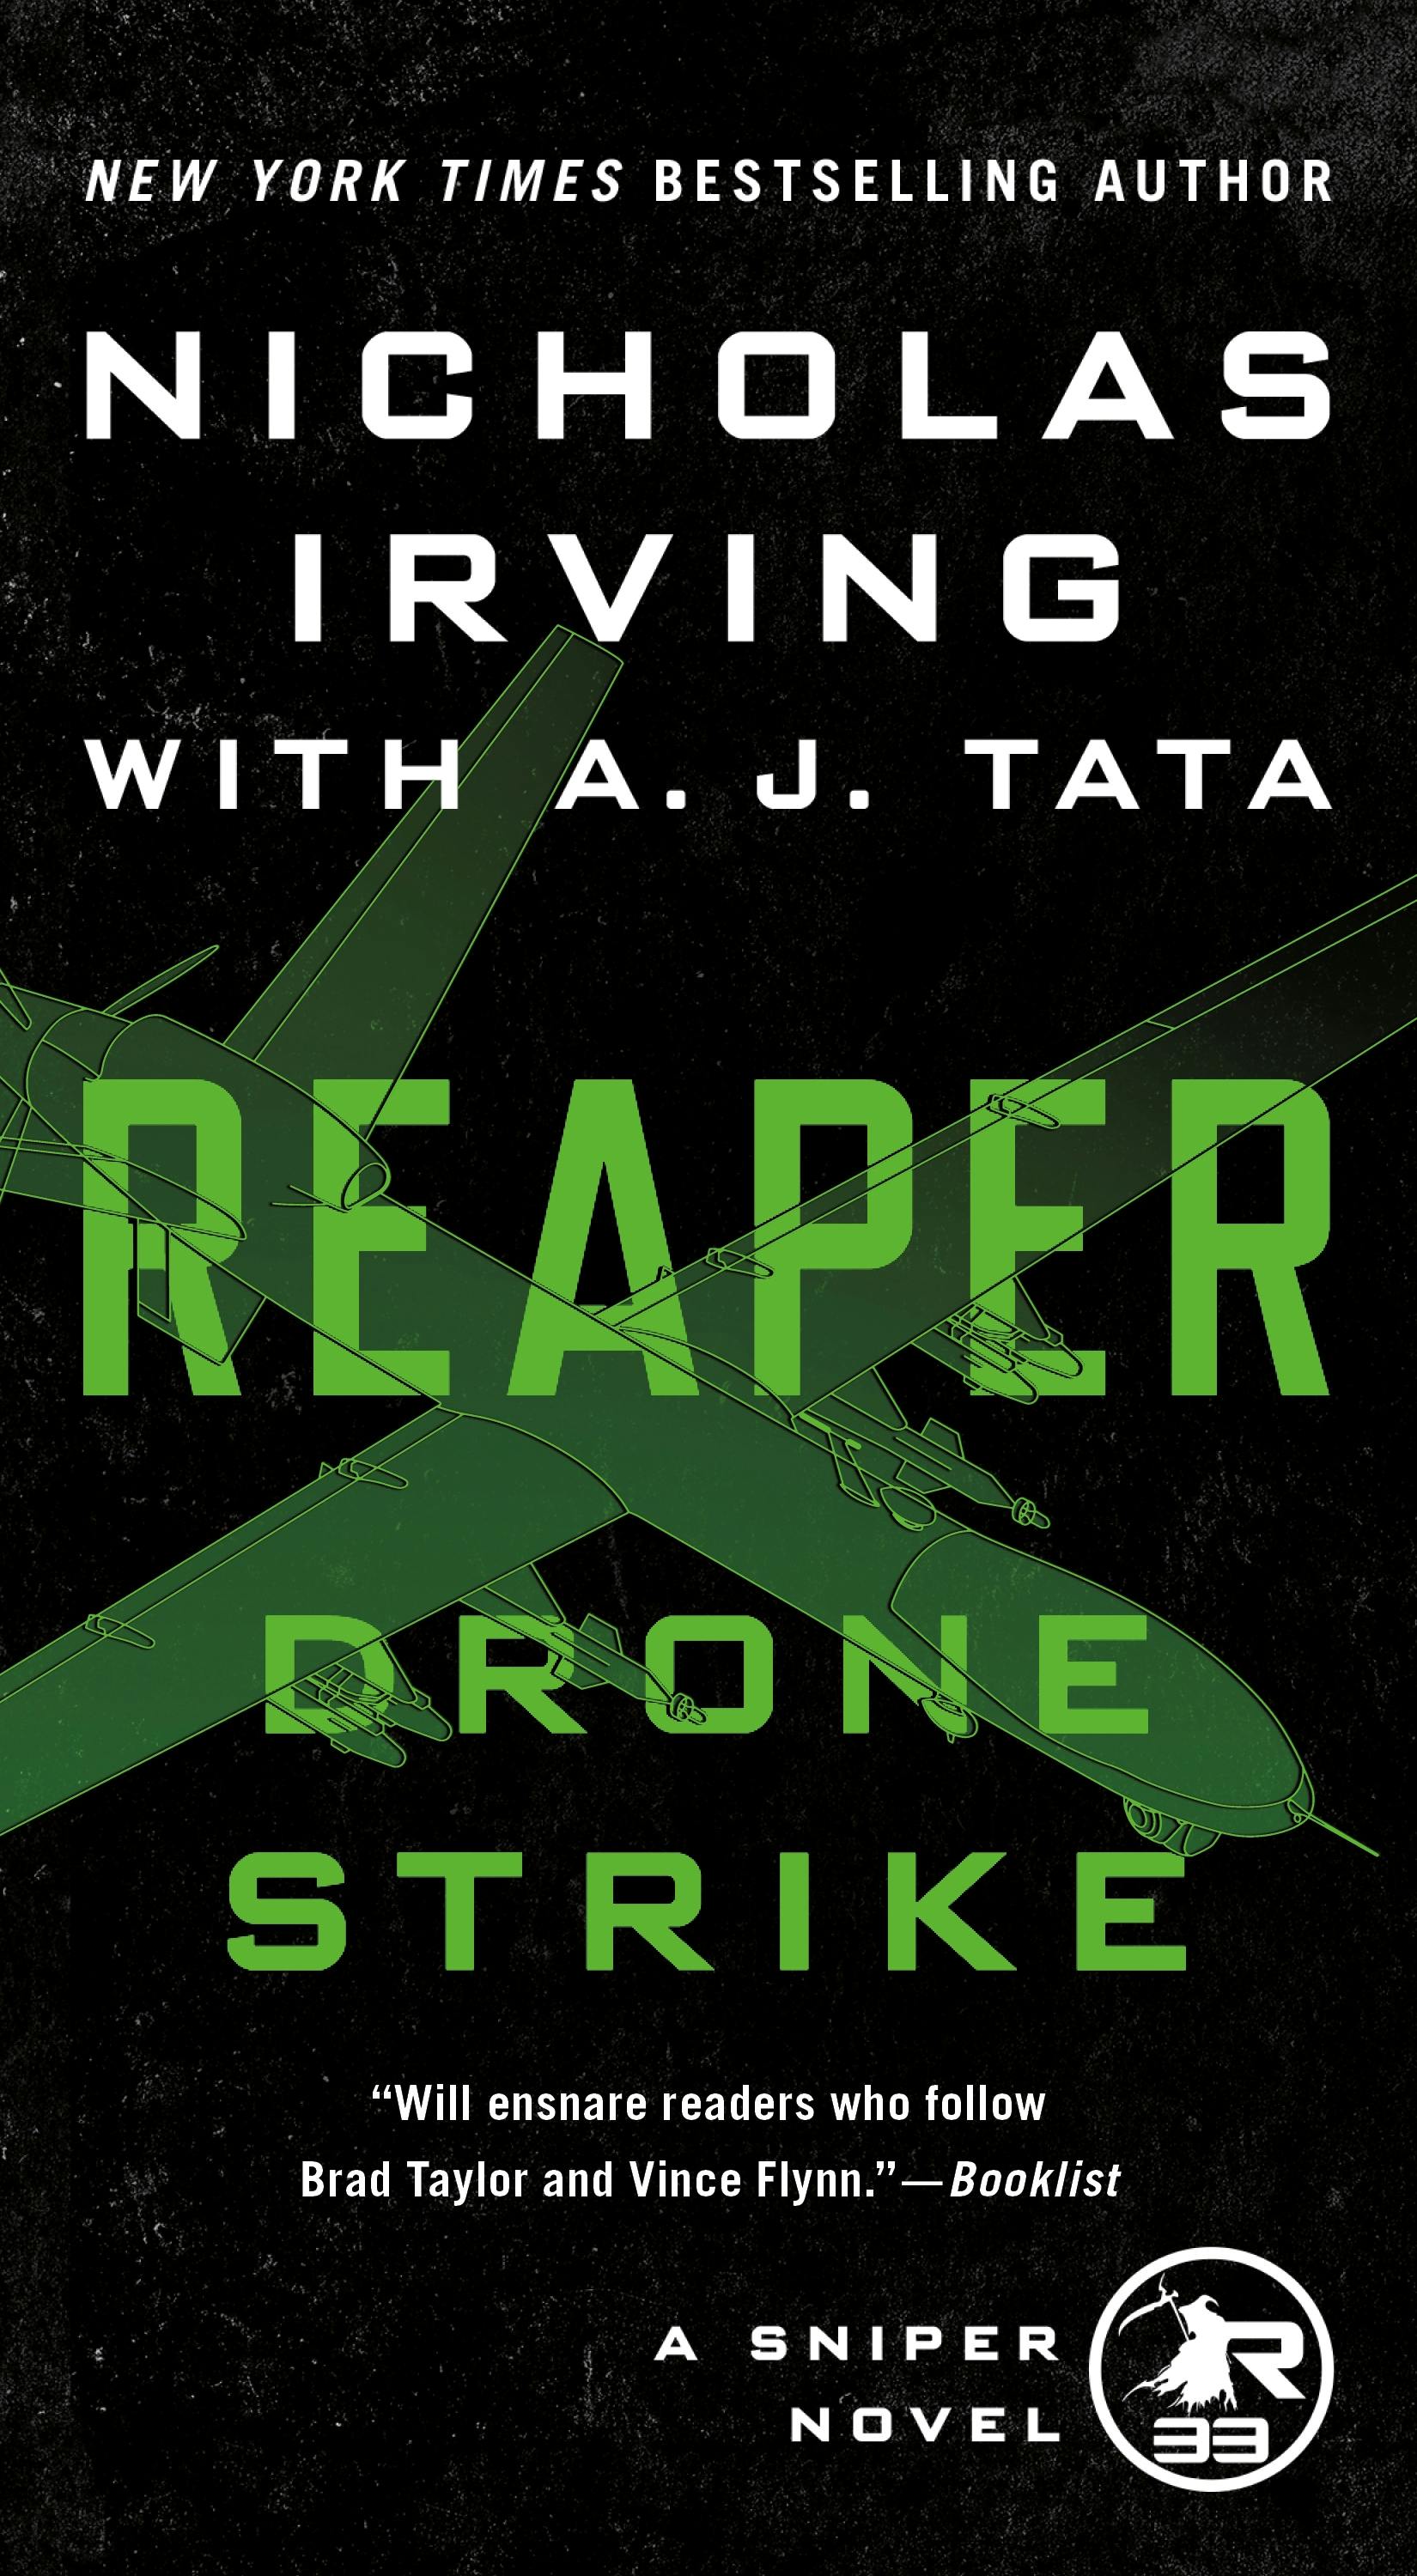 Image of Reaper: Drone Strike